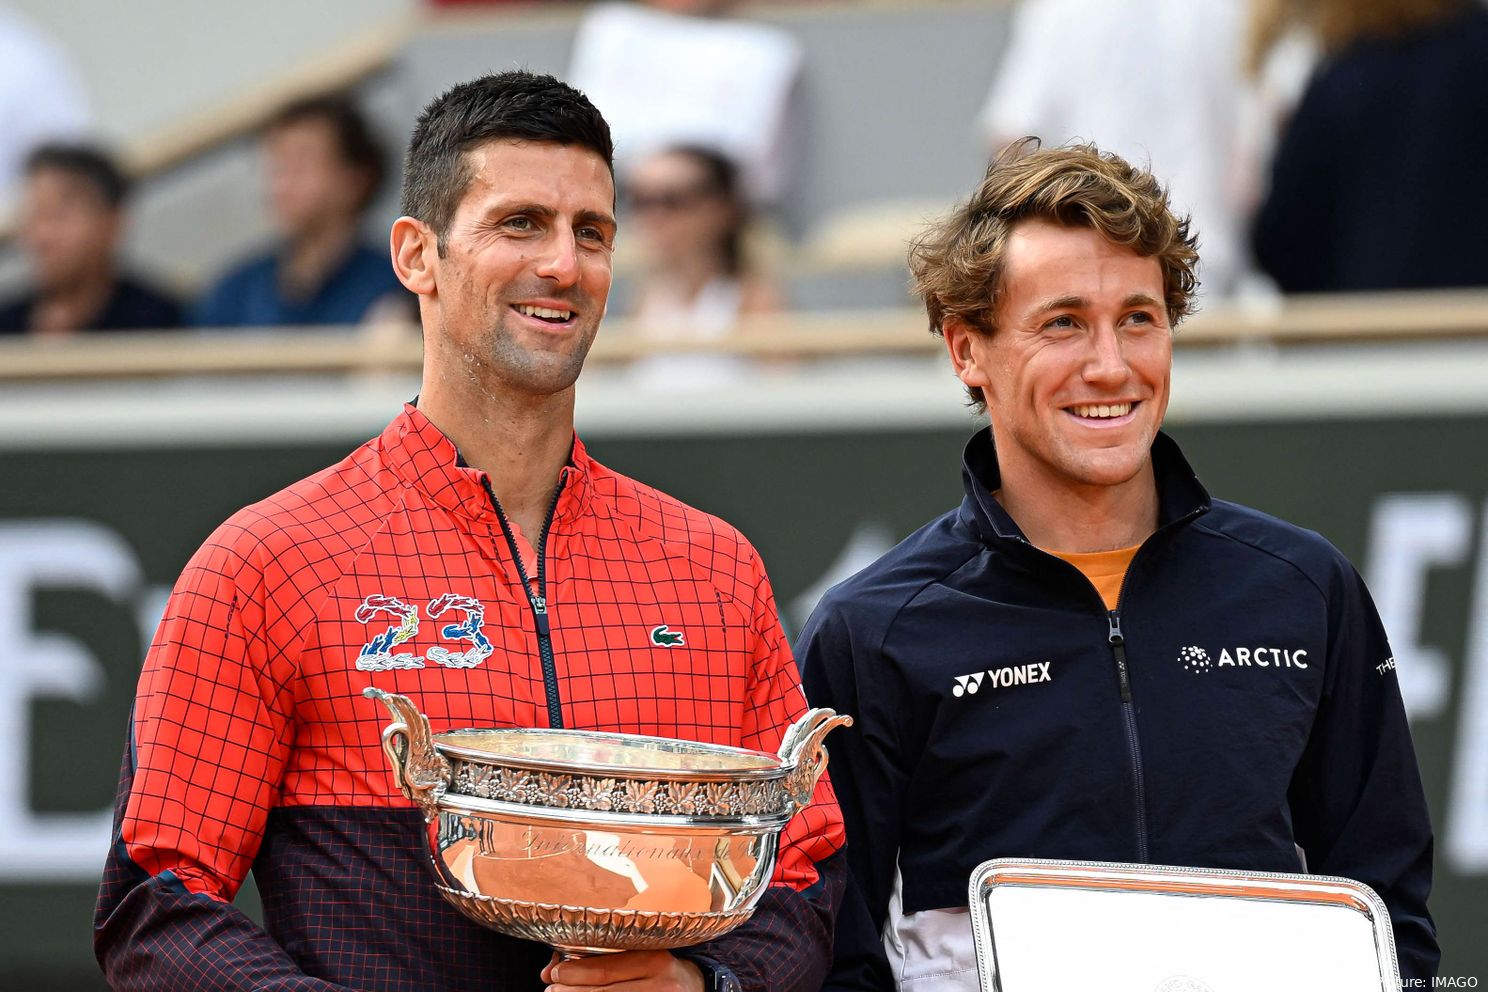 Bild Novak Djokovic (mit Pokal) und Casper Ruud&amp;amp;amp;amp;lt;br&amp;amp;amp;amp;gt;